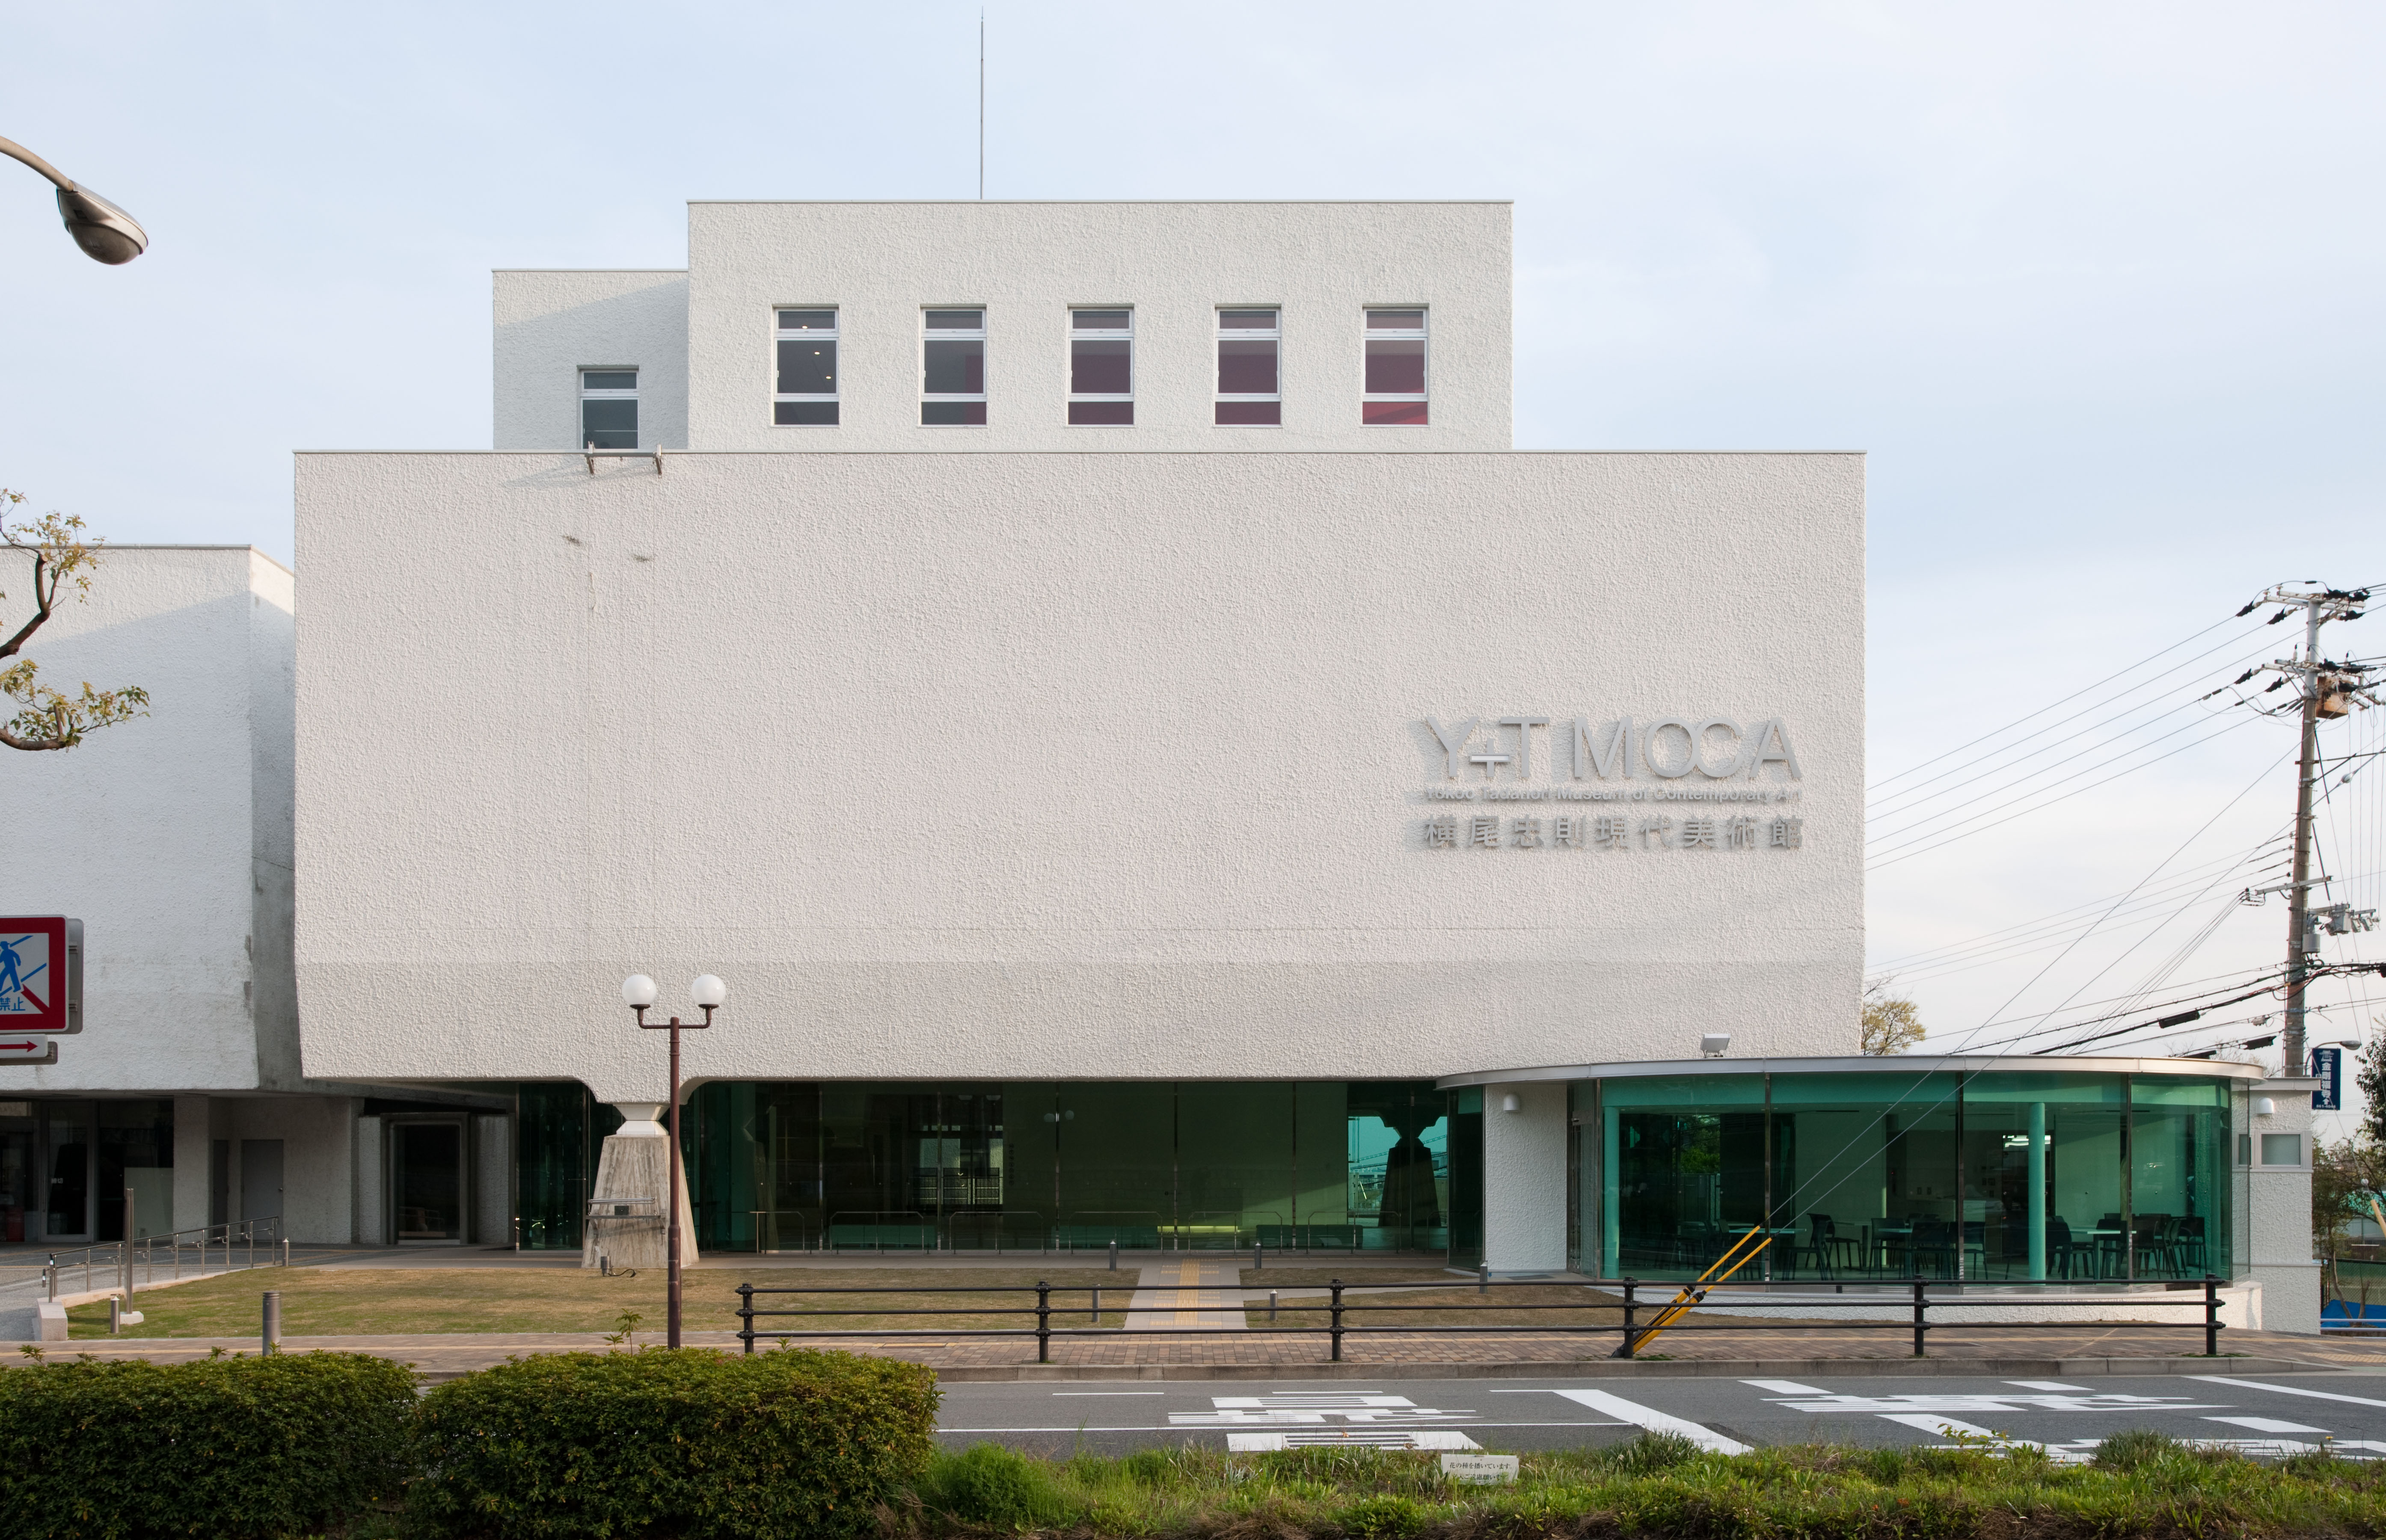 Yokoo Tadanori Museum of Contemporary Art E-Tickets